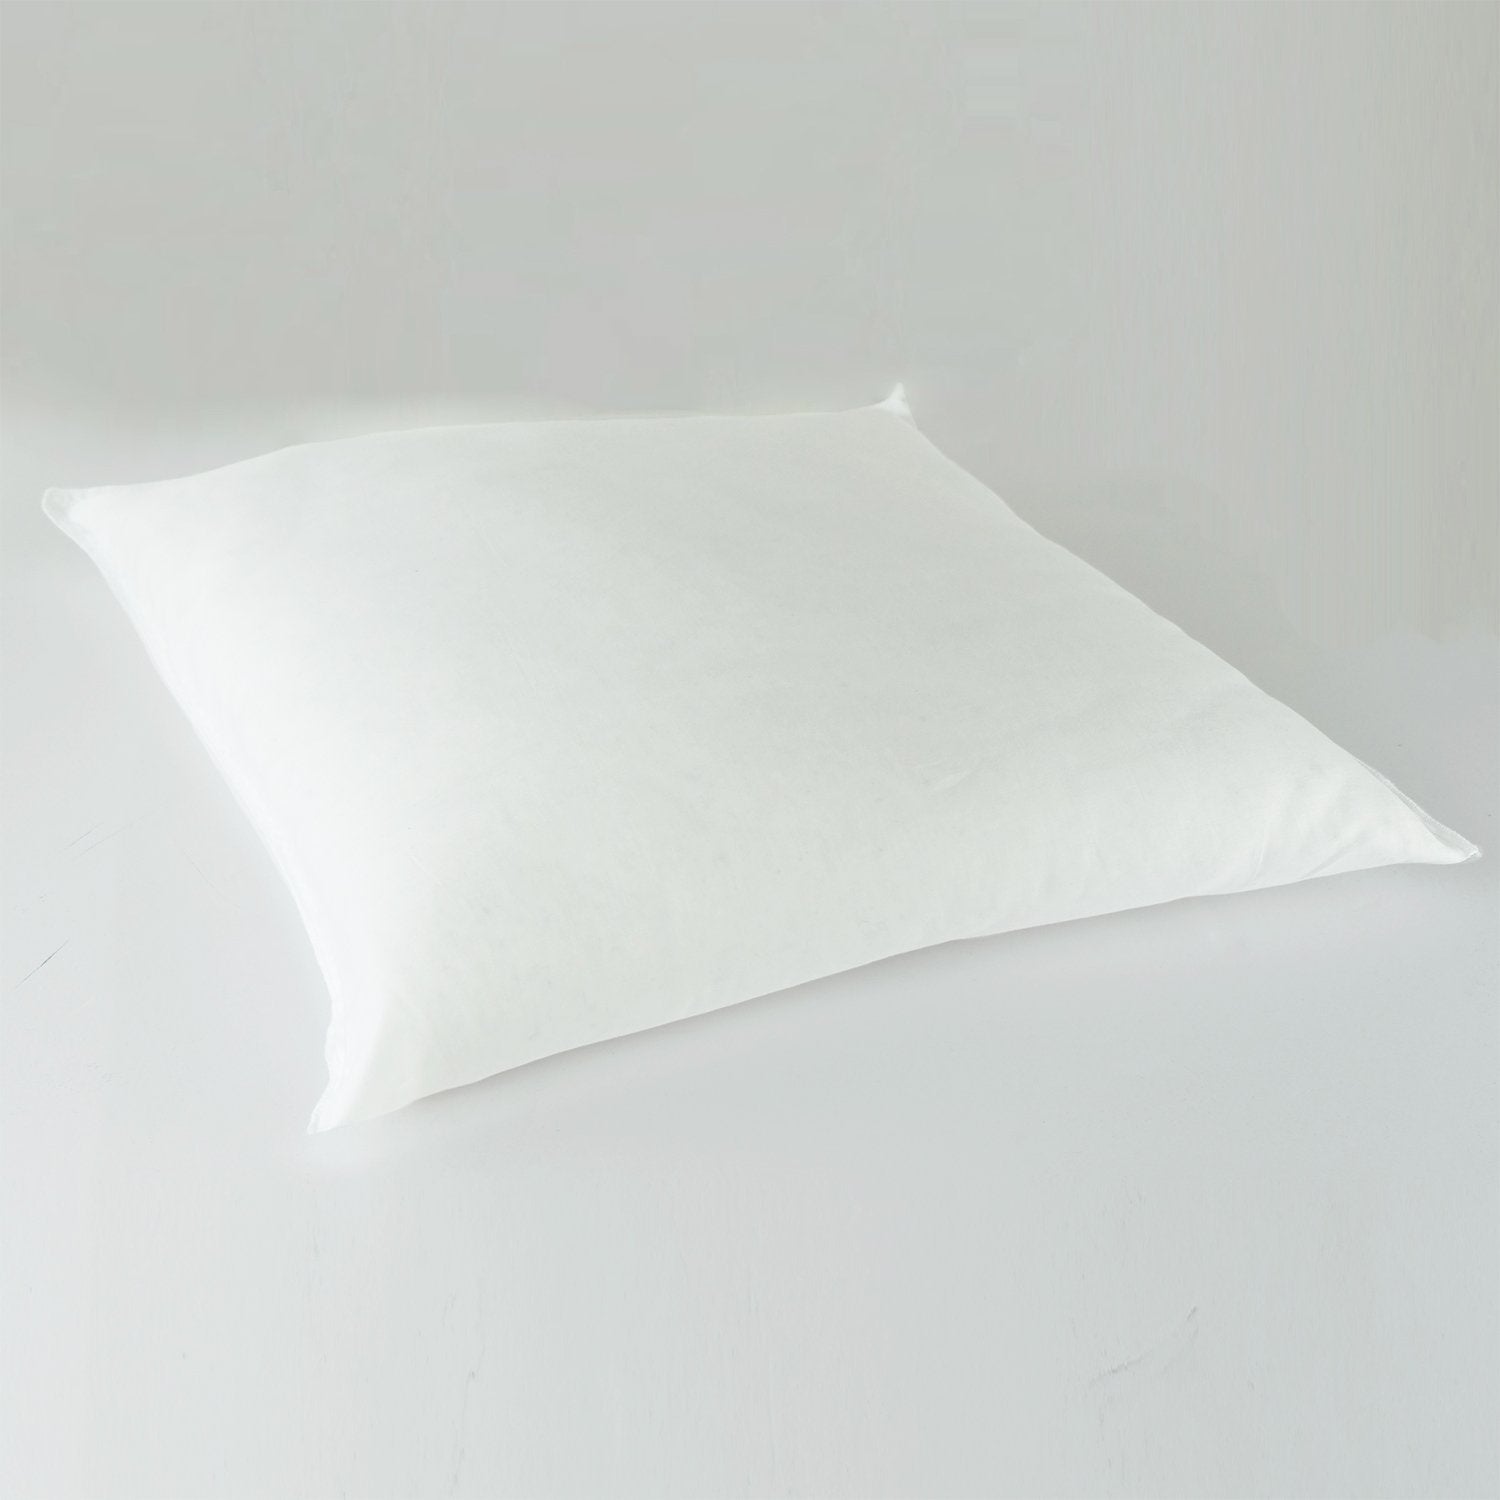 J-Life Cherry Blossom Blue Zabuton Floor Pillow_Pillows & Shams_Zabuton Floor Pillows_100% Cotton_Reversible_Handmade